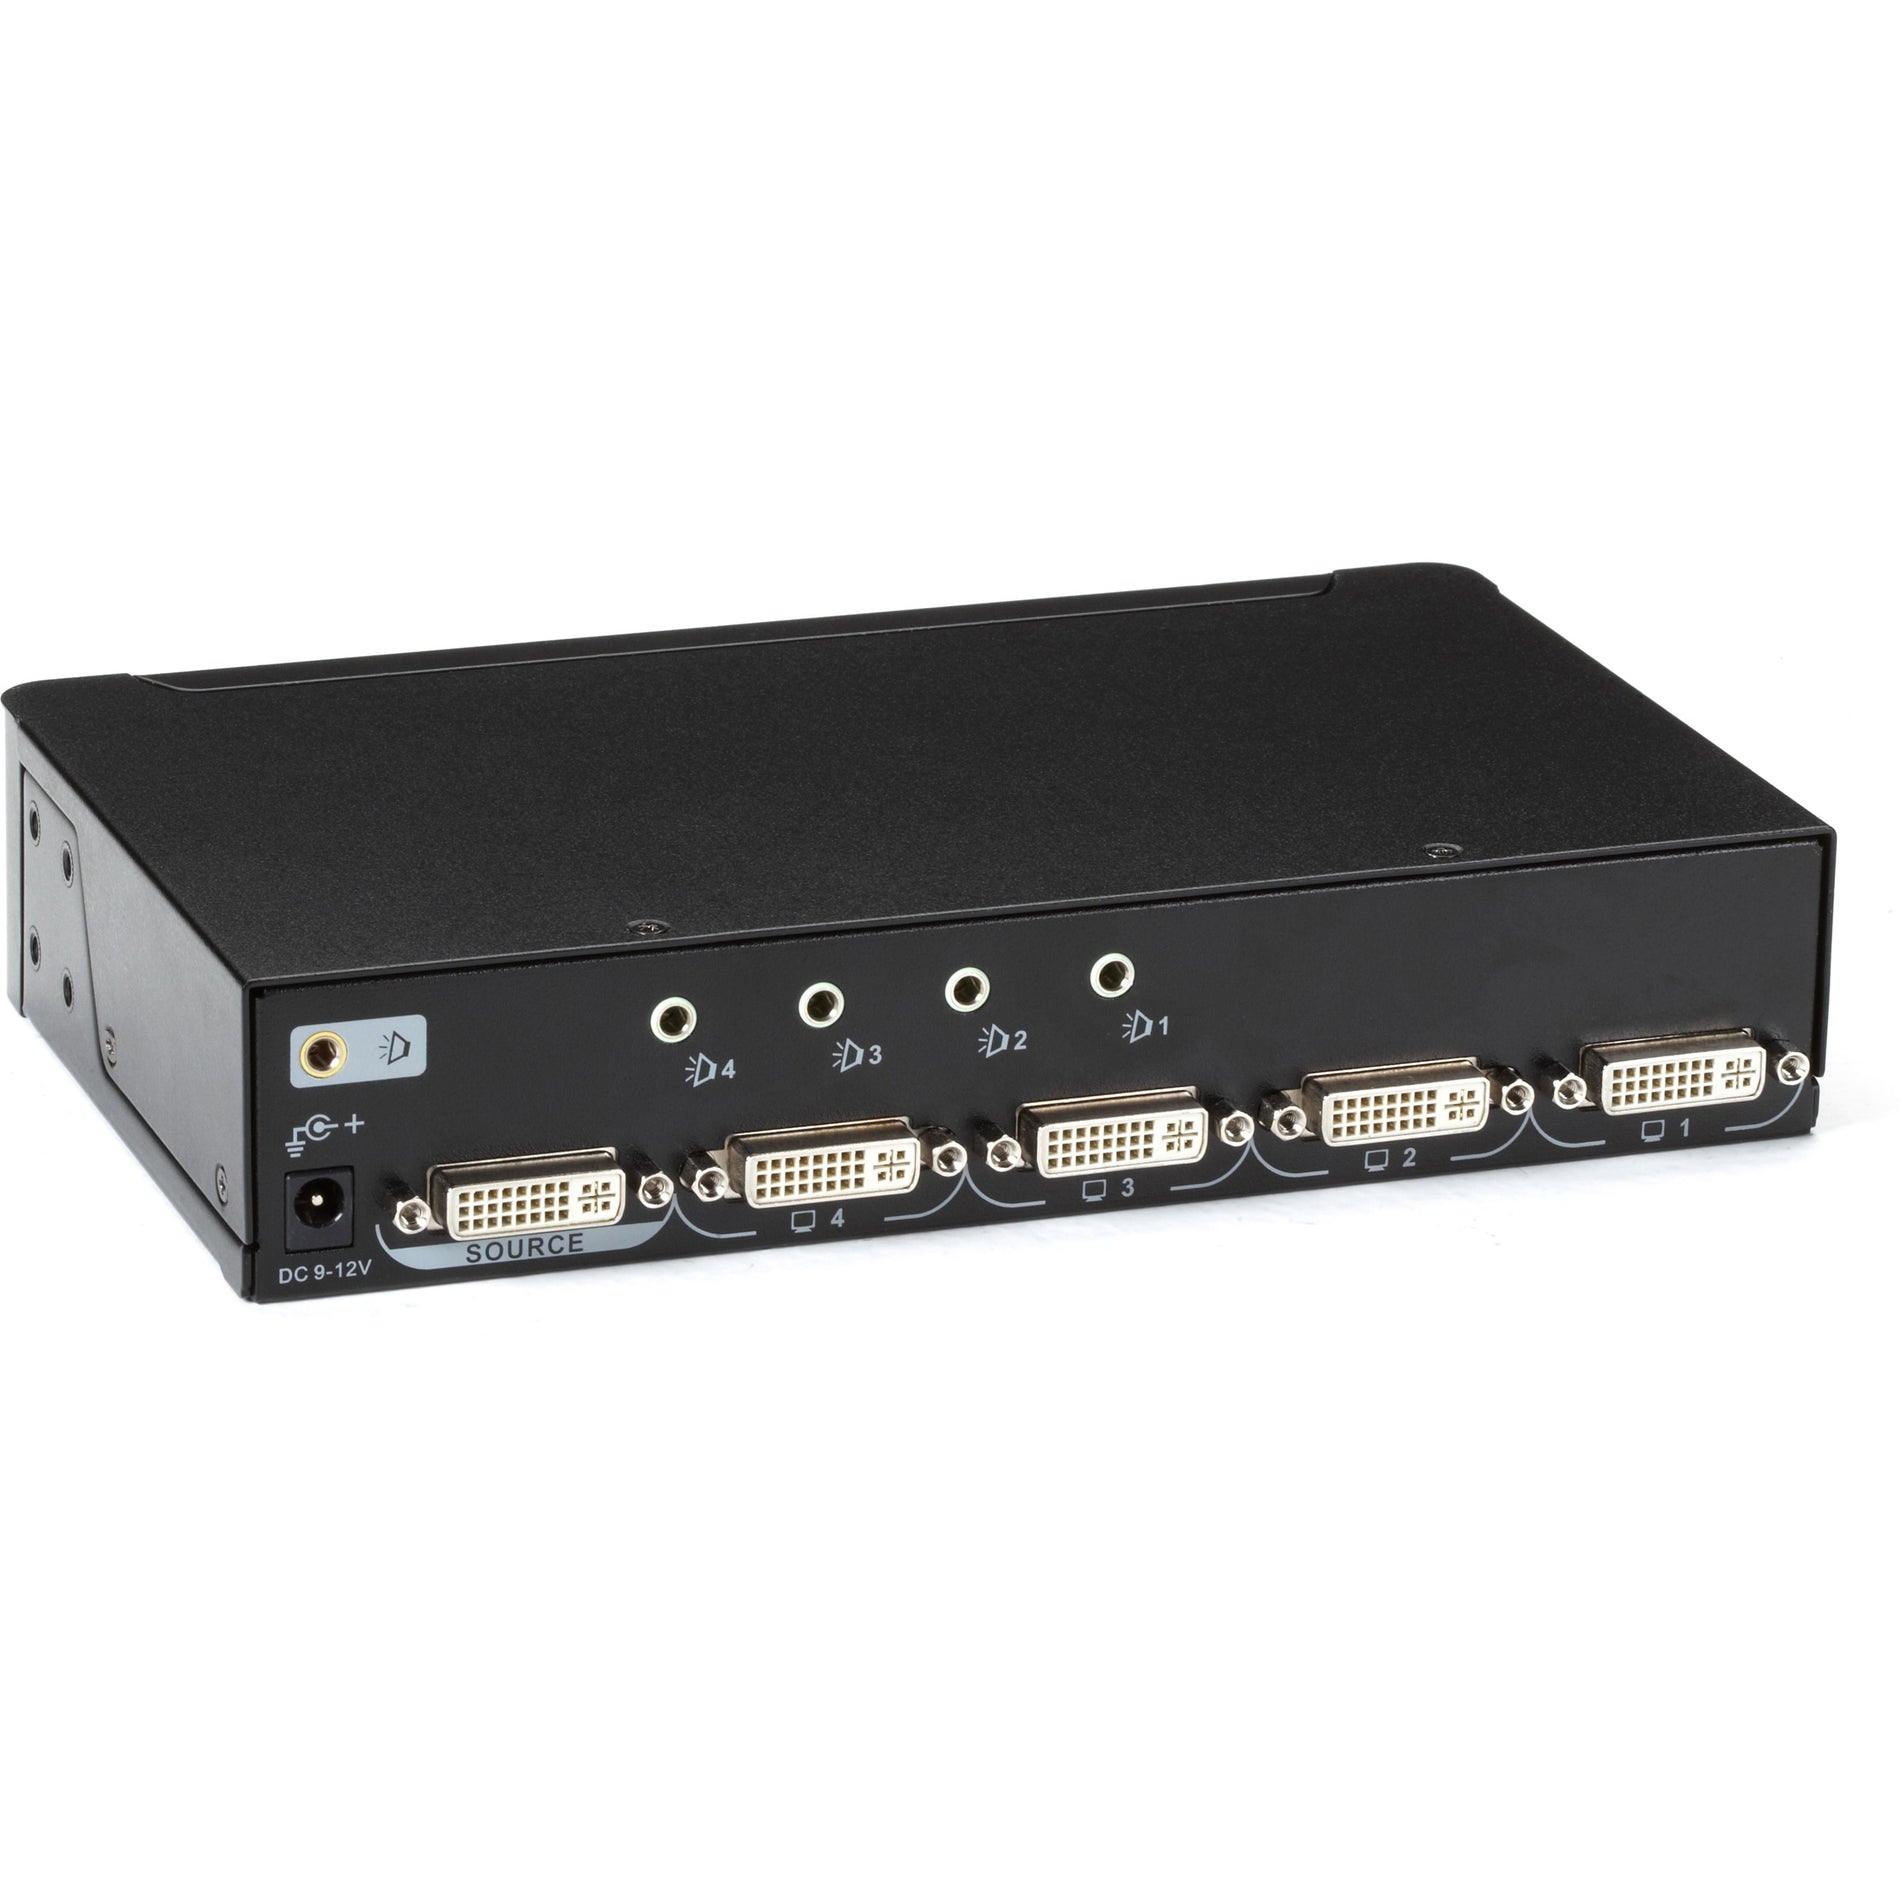 Black Box AVSP-DVI1X4 DVI-D Splitter with Audio and HDCP, 1 x 4, Full-HD 1080p, WUXGA, Cascadable